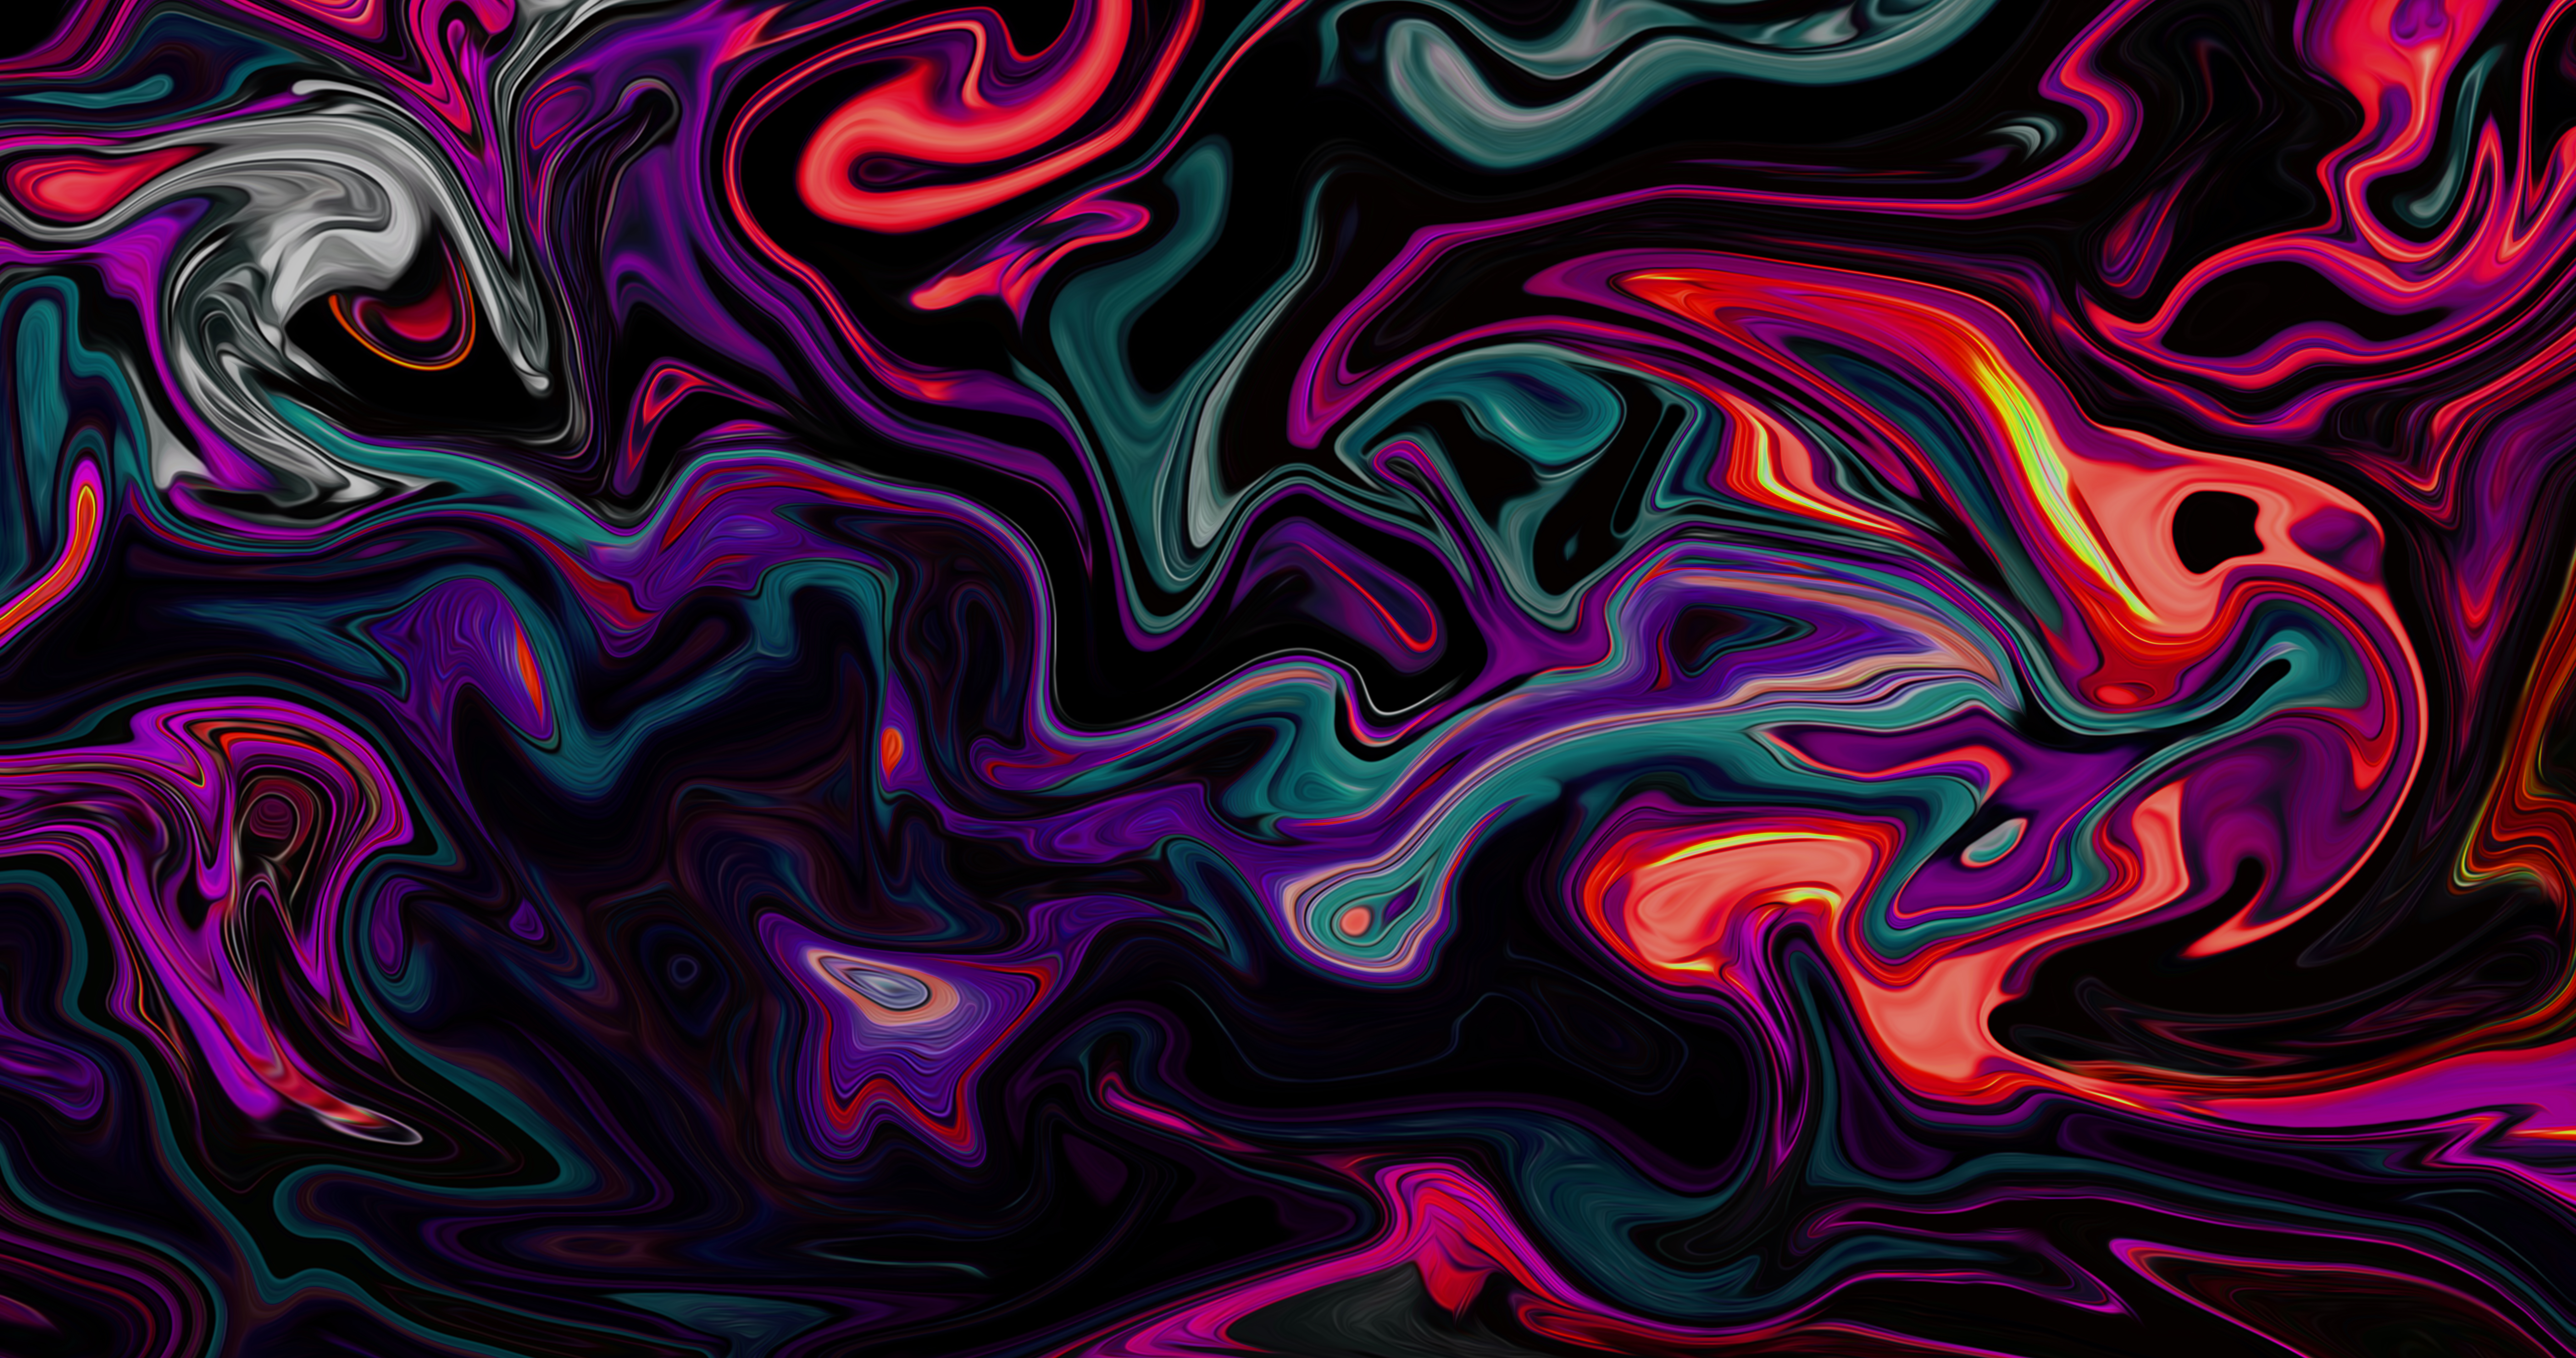 Abstract Fluid Liquid Colorful Artwork Digital Art Shapes Paint Brushes 8 K 8192x4320